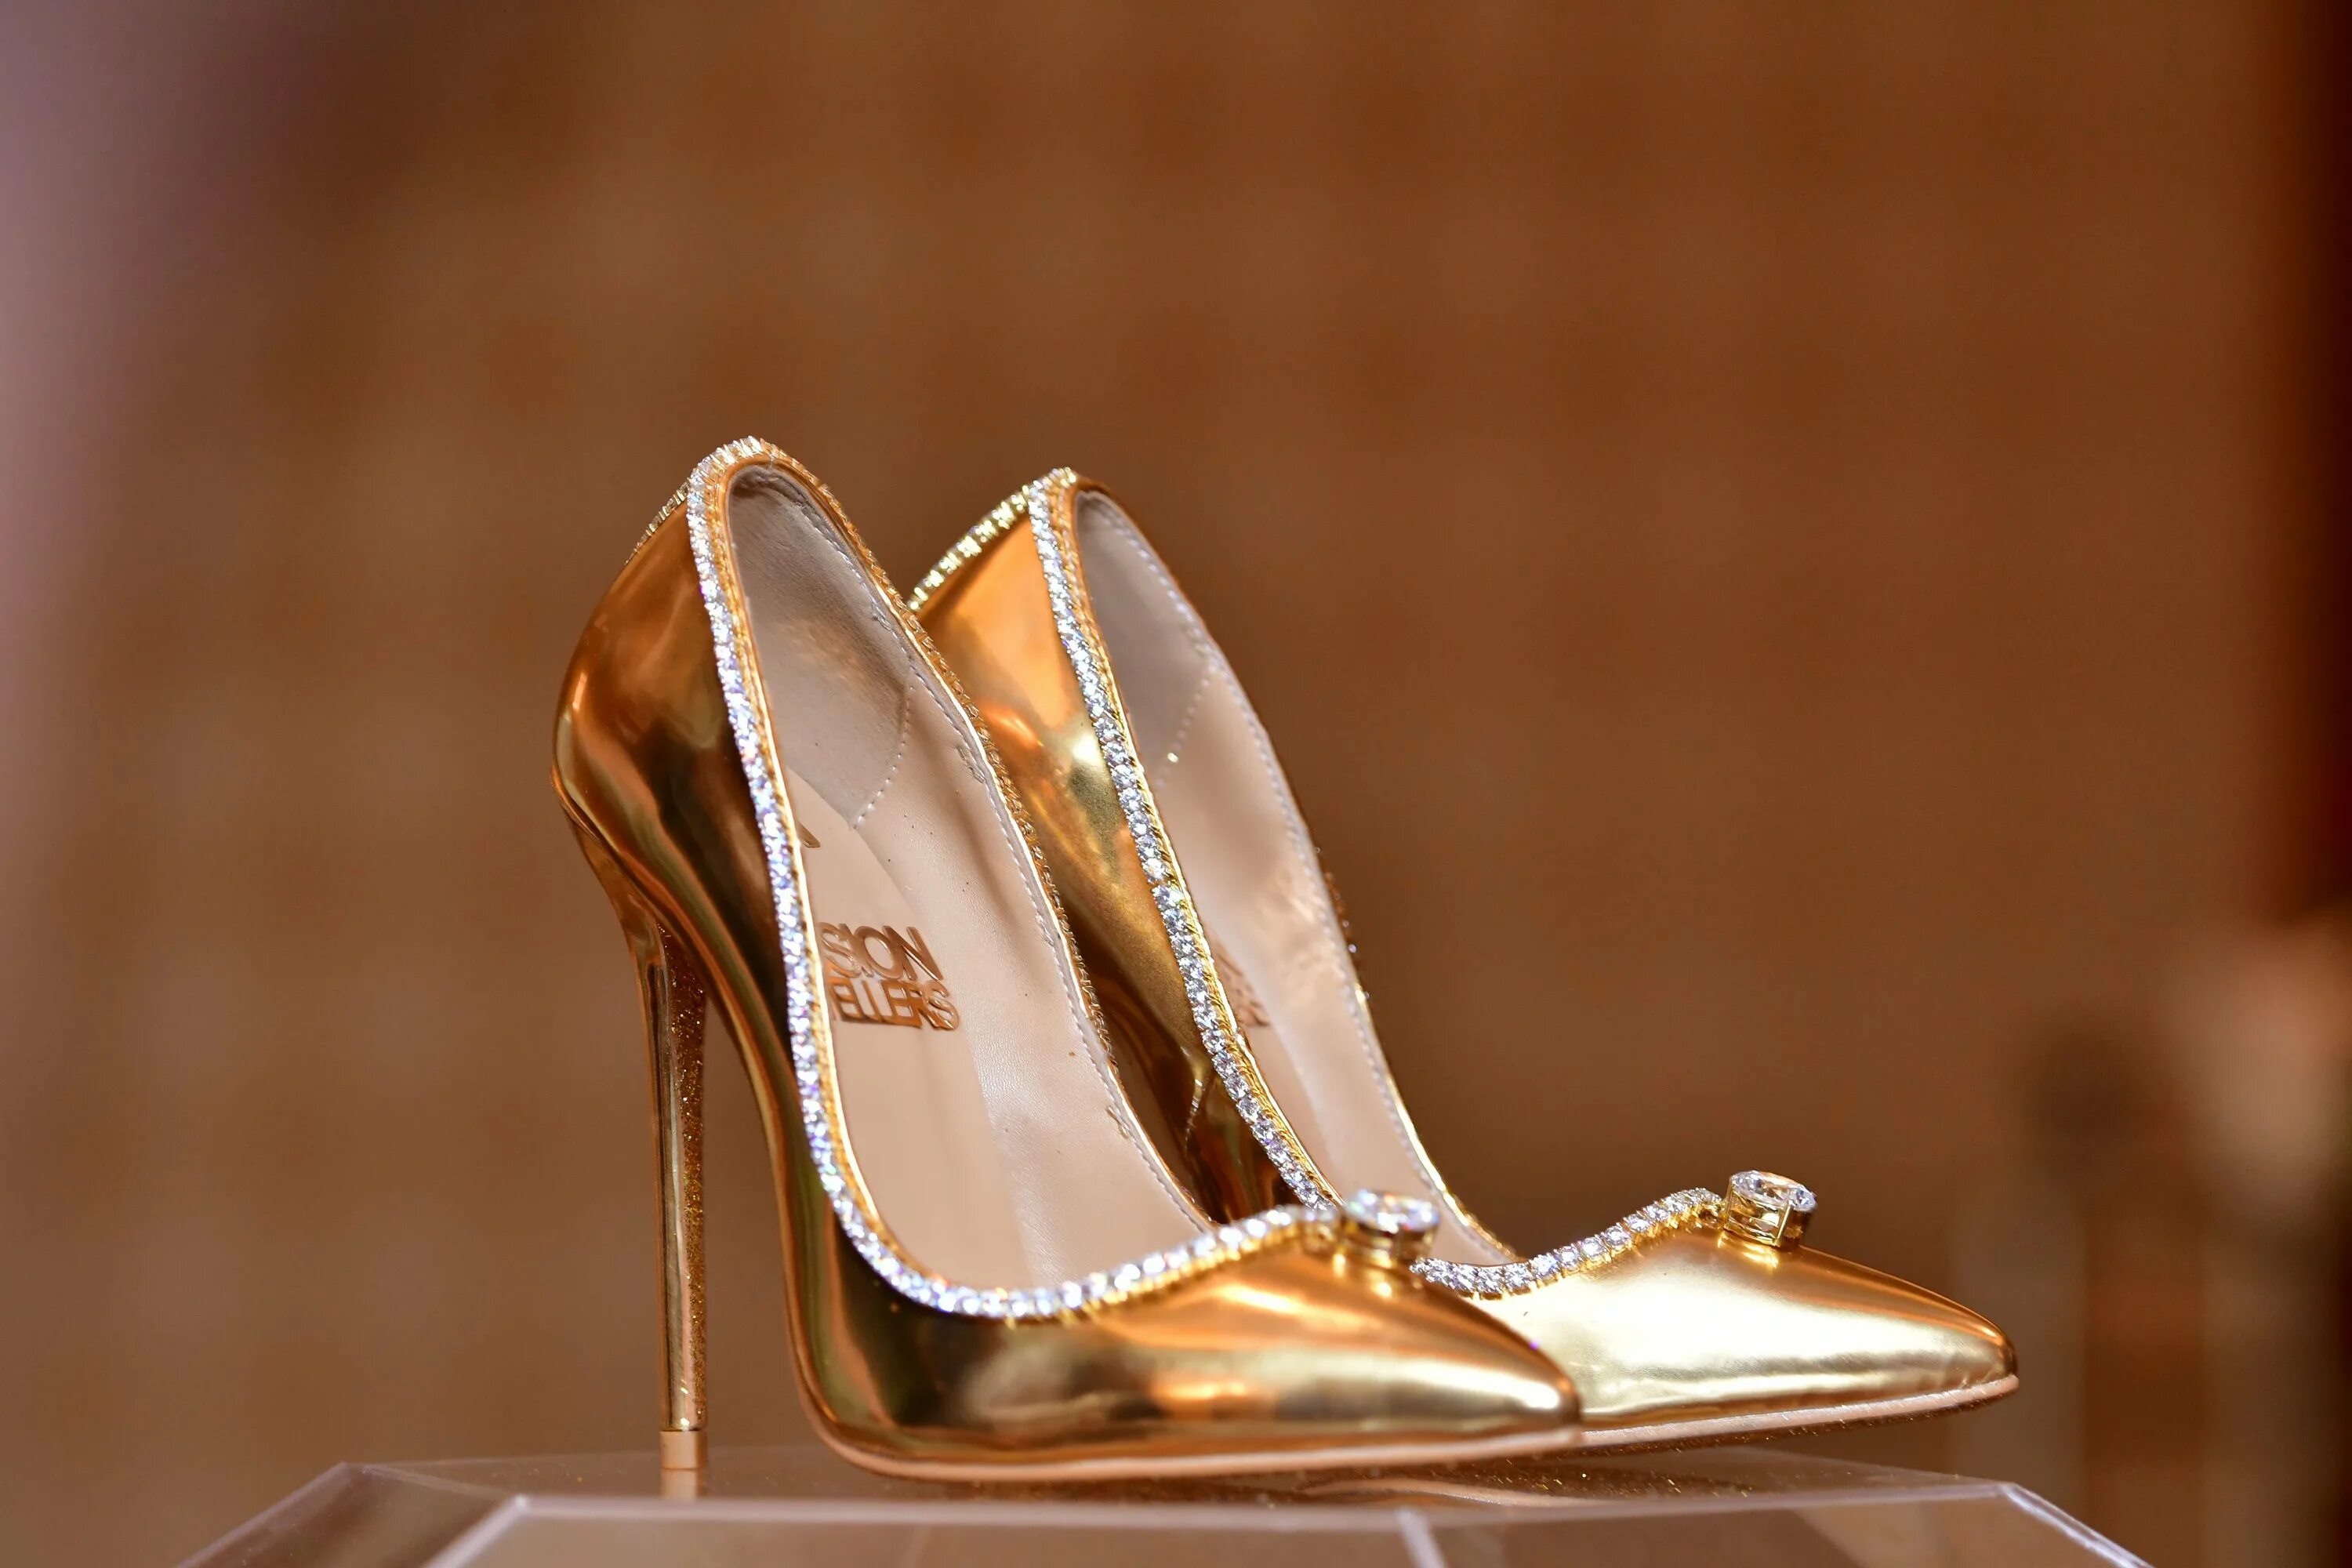 Expensive предложения. Туфли Пэшион Даймонд. Золотые туфли Jimmy Choo. Jada Dubai туфли. Jada Dubai passion Diamond Shoes.